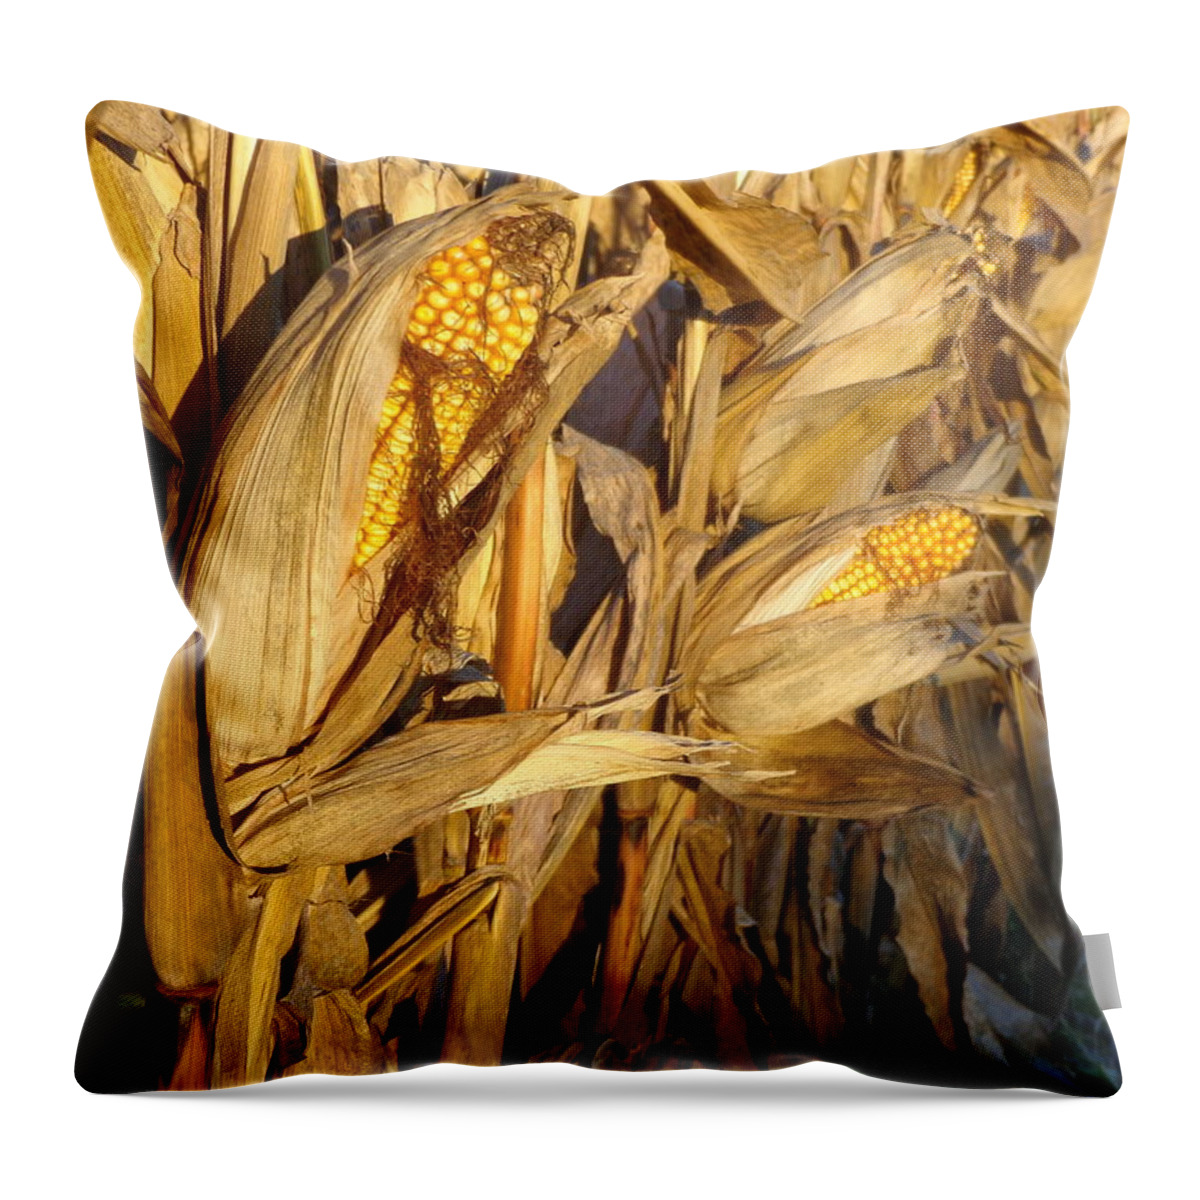 Skompski Throw Pillow featuring the photograph Golden Corn by Joseph Skompski